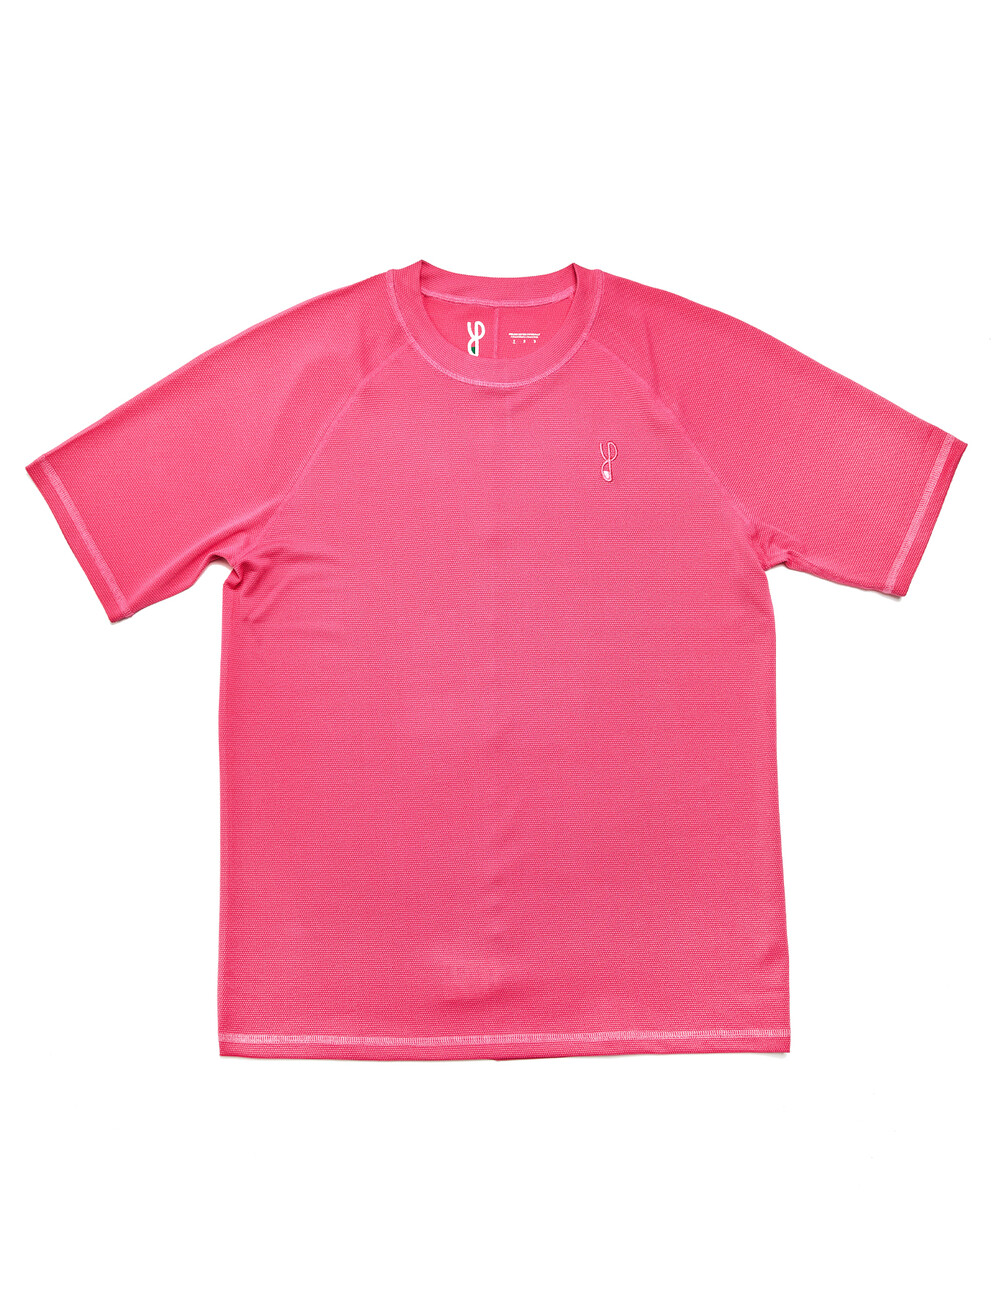 Raglan Short sleeve, Pink